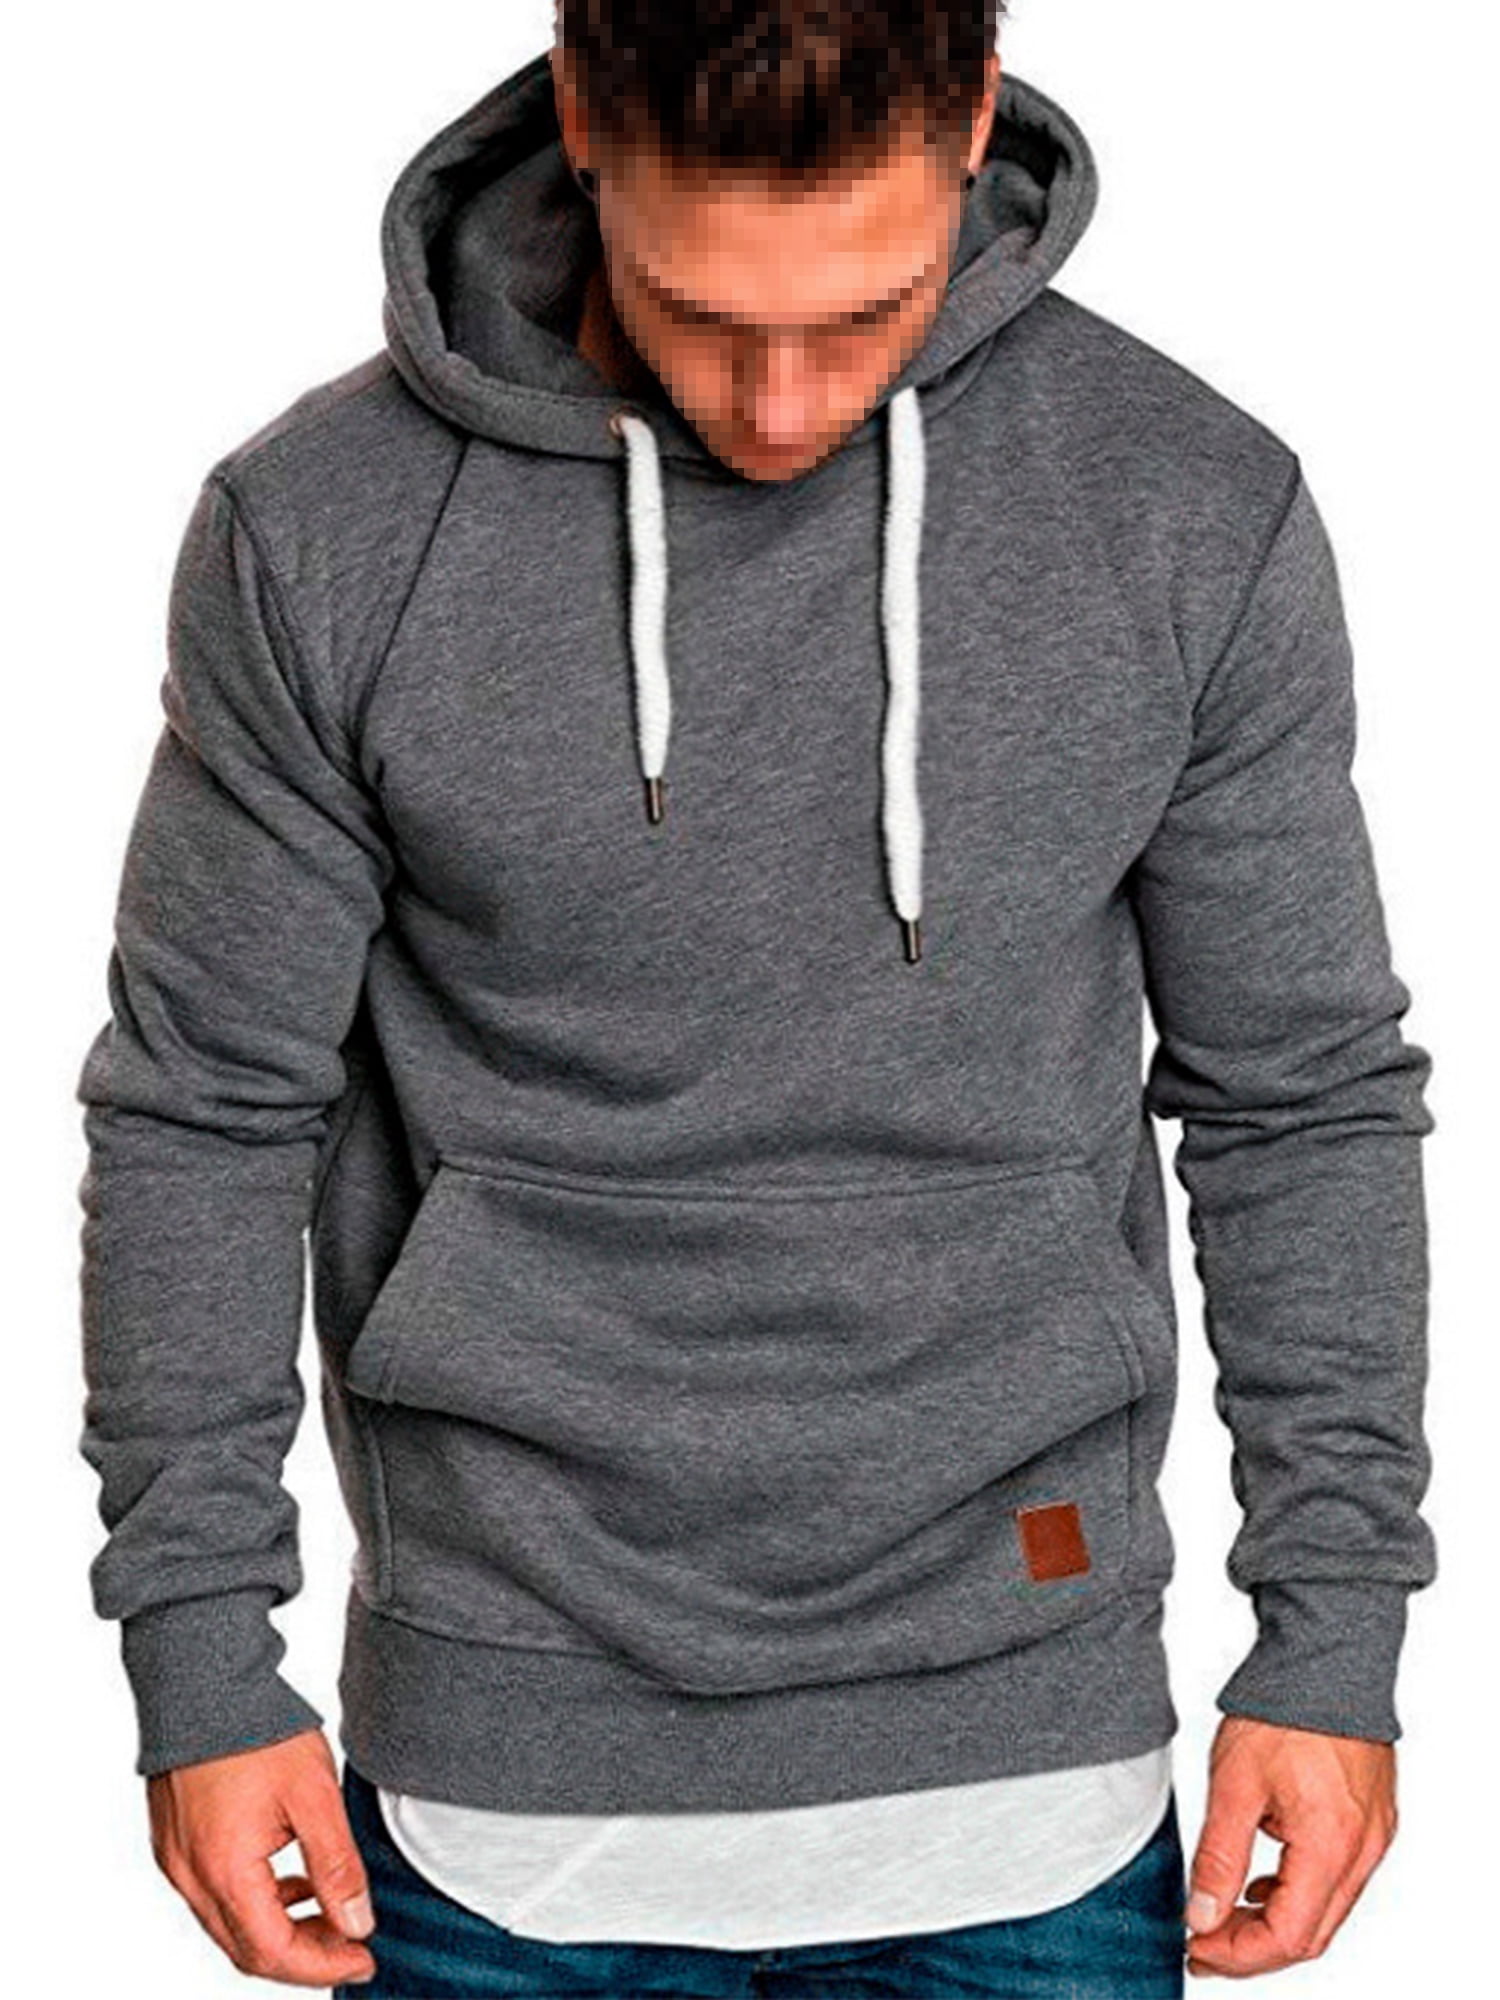 Details about   Build your Brand Mens Plain Heavy Hoodie Hoody Hooded Sweatshirt Top Jumper 